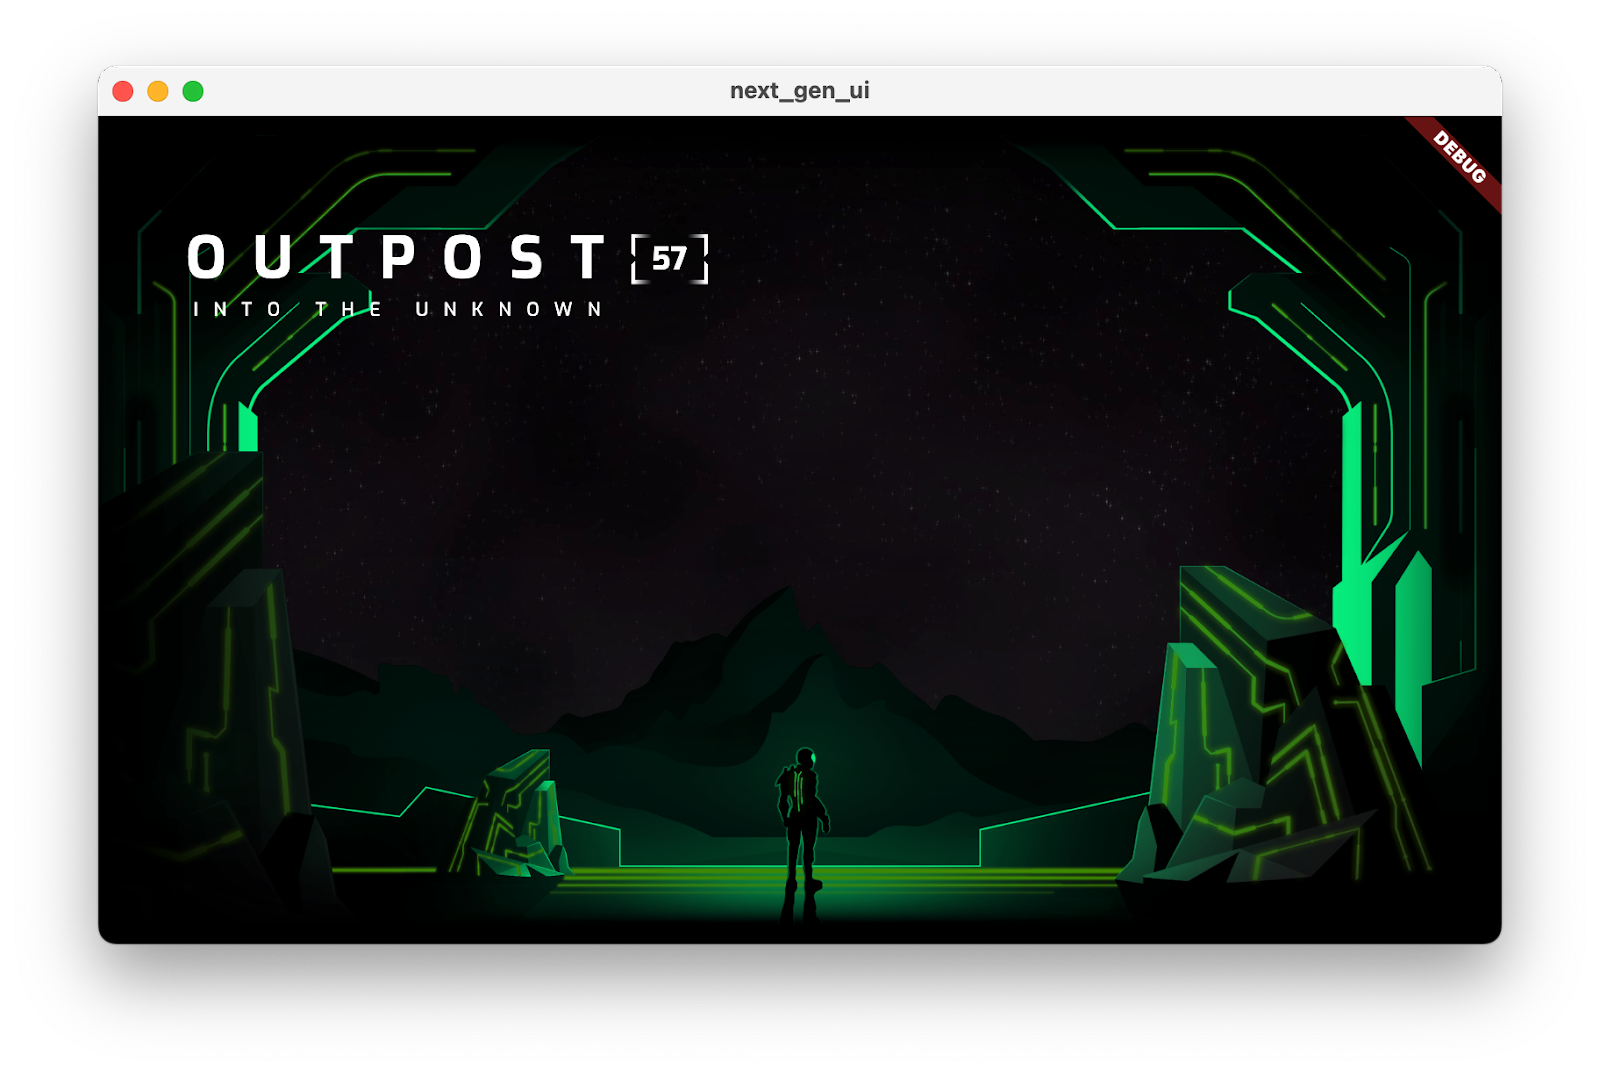 Aplikasi codelab dengan judul 'Outpost [57] Into the unknown'